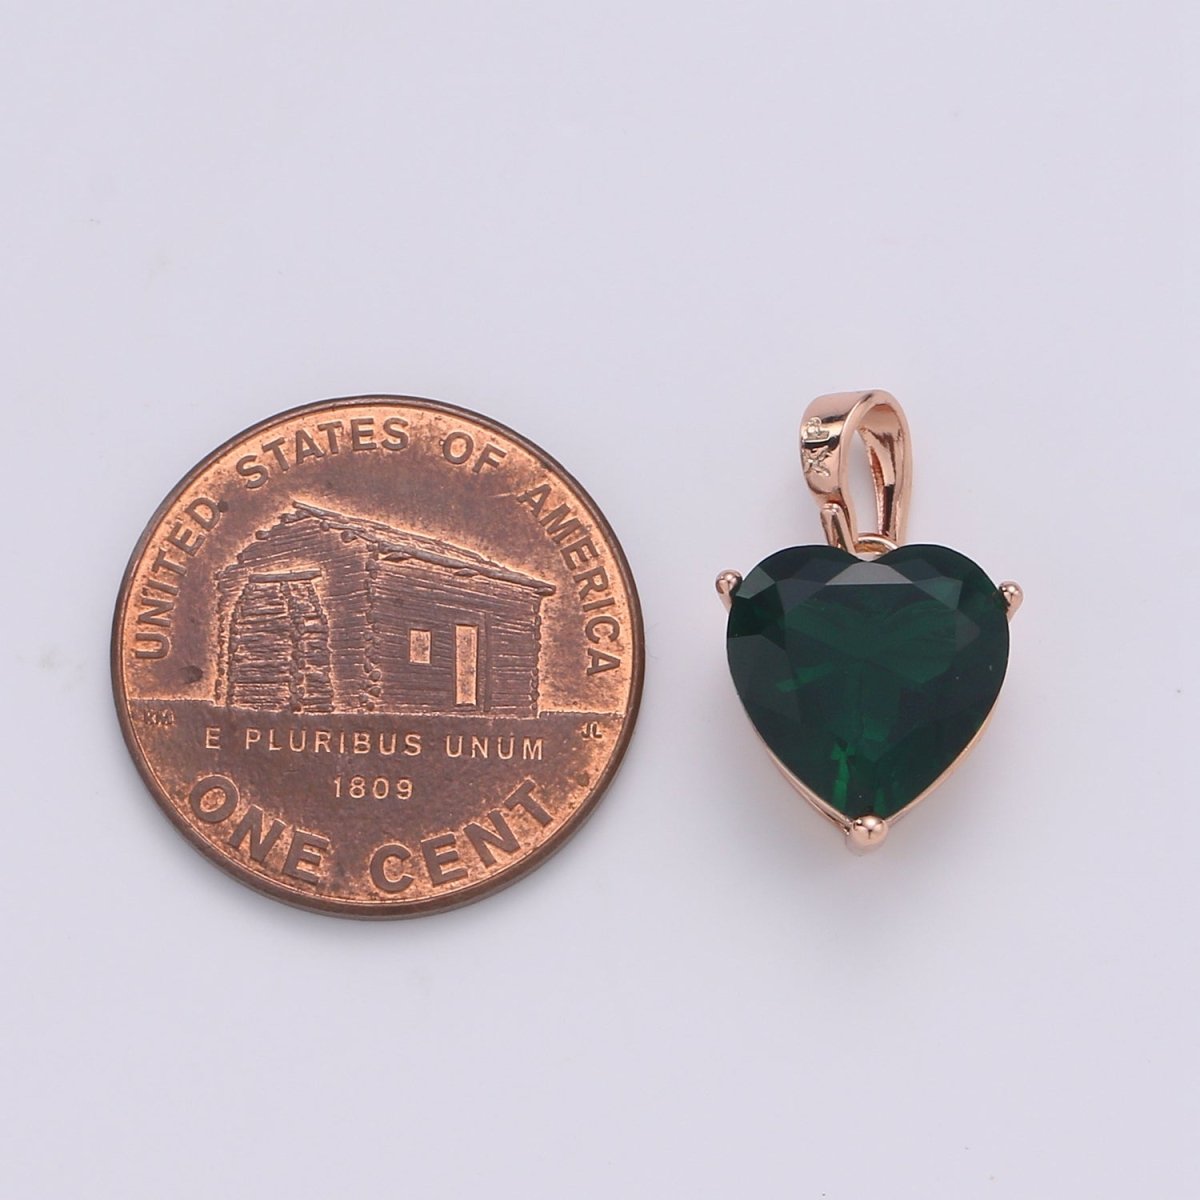 OS 18k Gold Fill Charm Pink Heart Cubic Zirconia Charm w/ Colored CZ Crystal Gem Stone GemStone Pendant Valentine Jewelry Supply J165 - DLUXCA